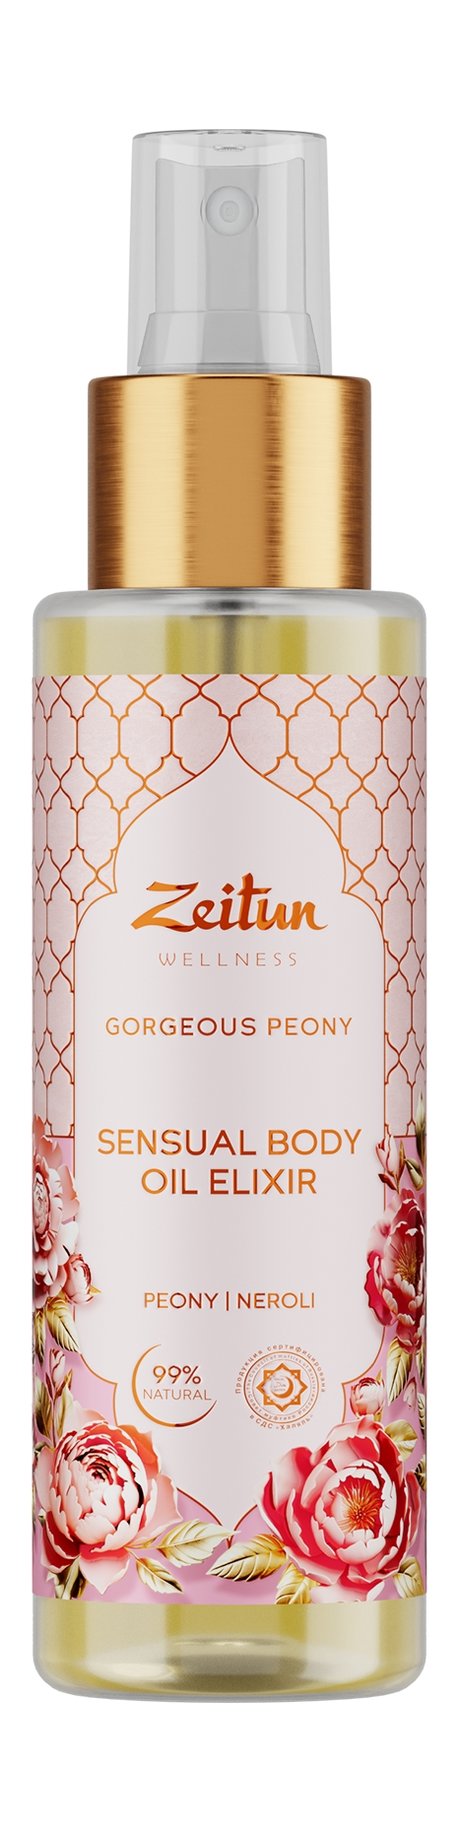 zeitun wellness gorgeous peony sensual body oil elixir